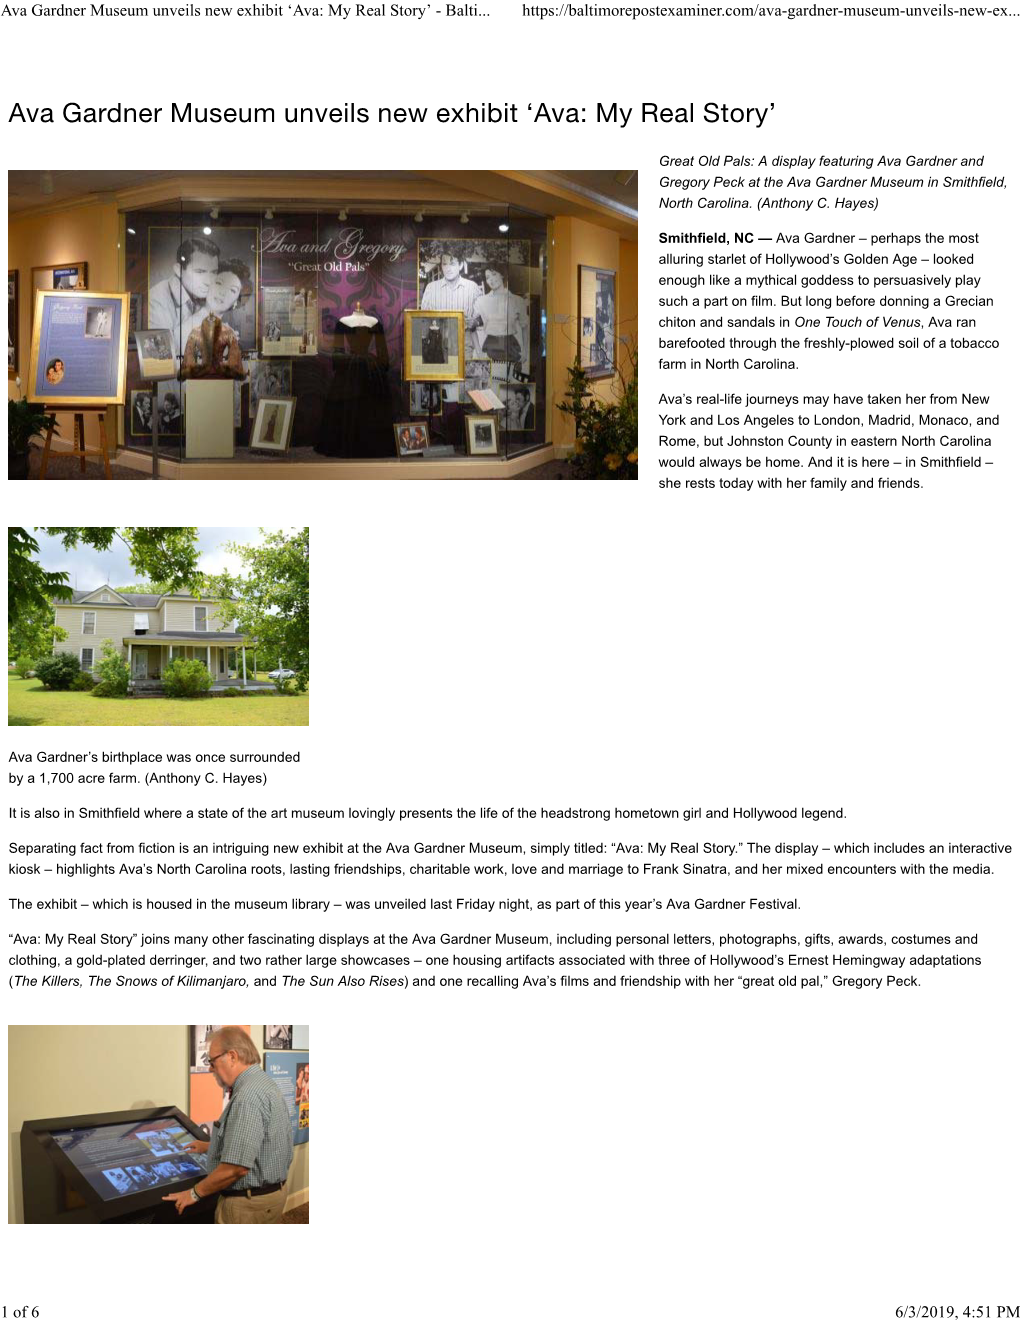 Ava Gardner Museum Unveils New Exhibit ‘Ava: My Real Story’ - Balti